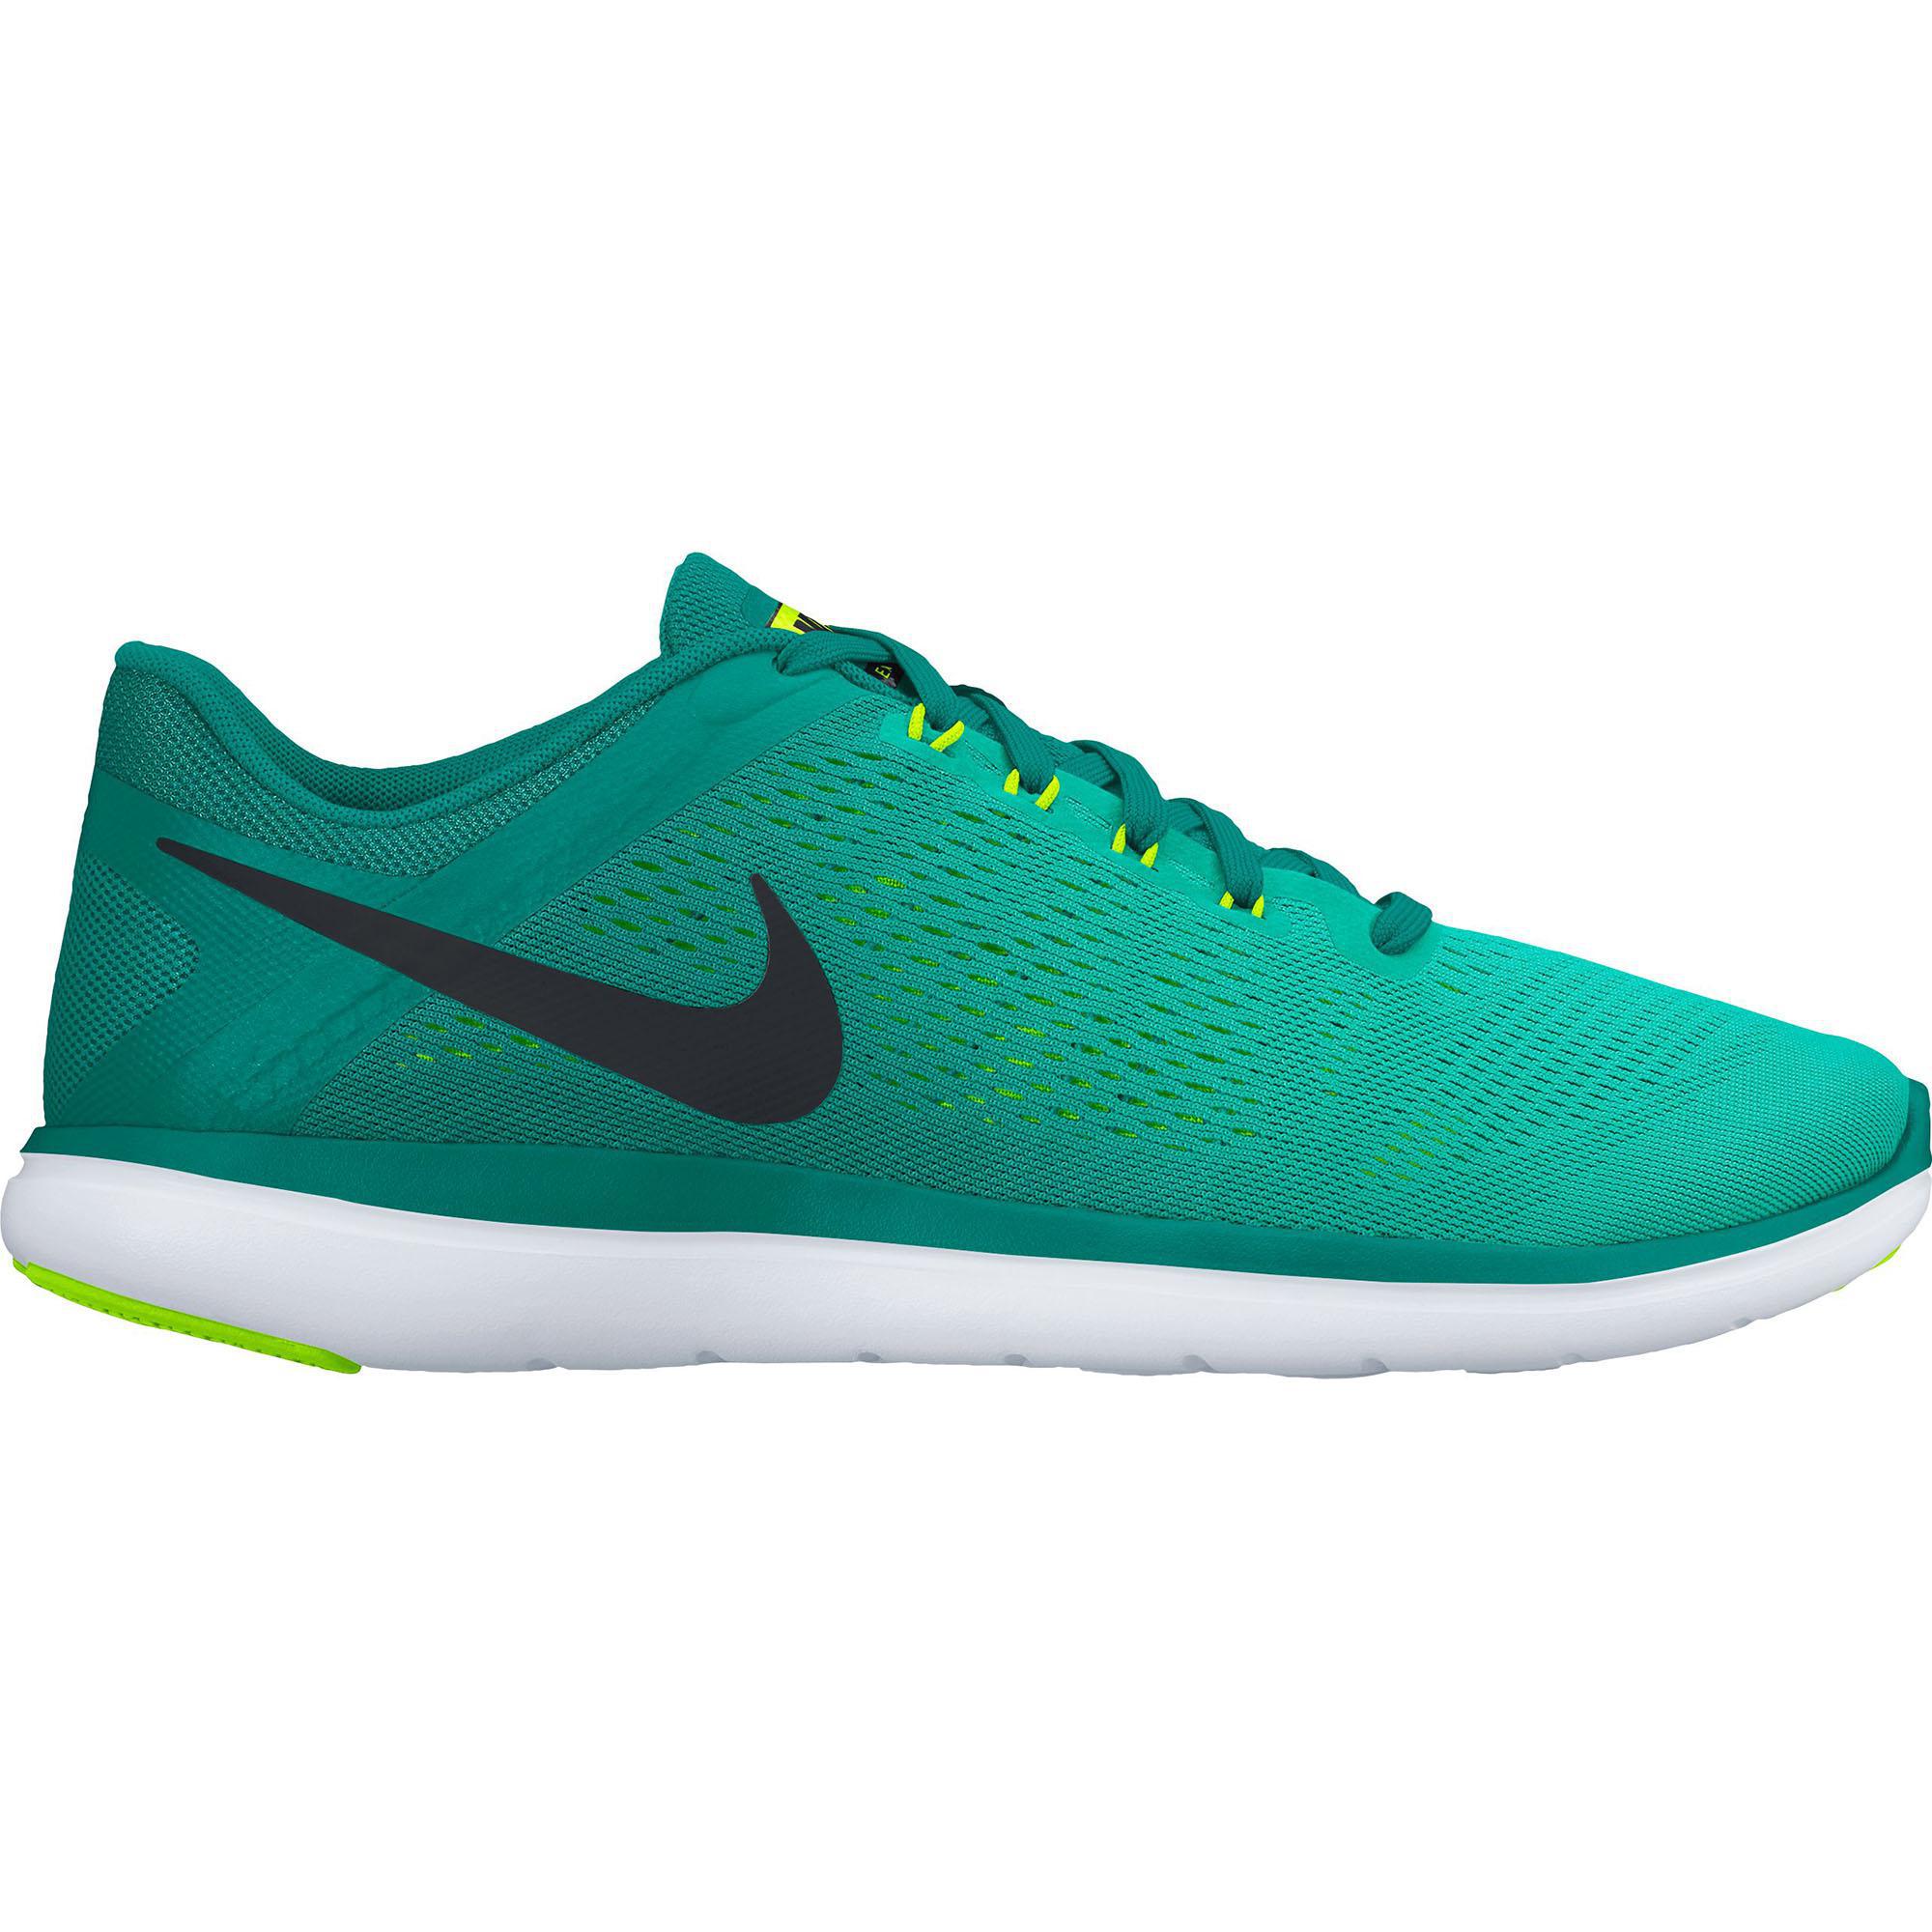 Nike Mens Flex 2016 Running Shoes - Rio Teal / Black - Tennisnuts.com